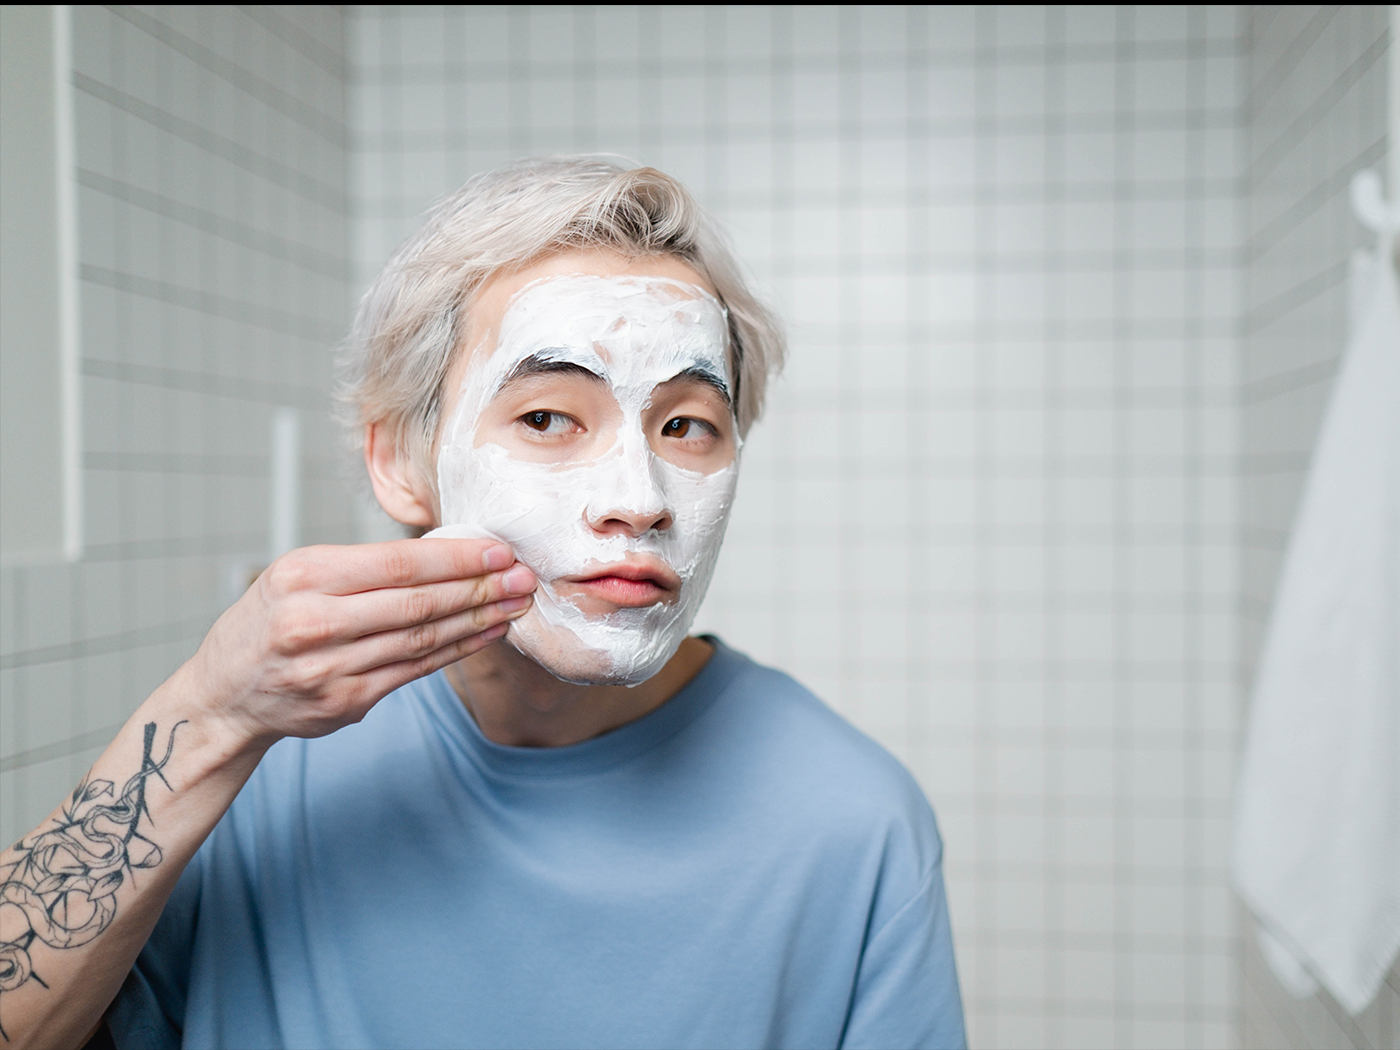 Man applying face mask